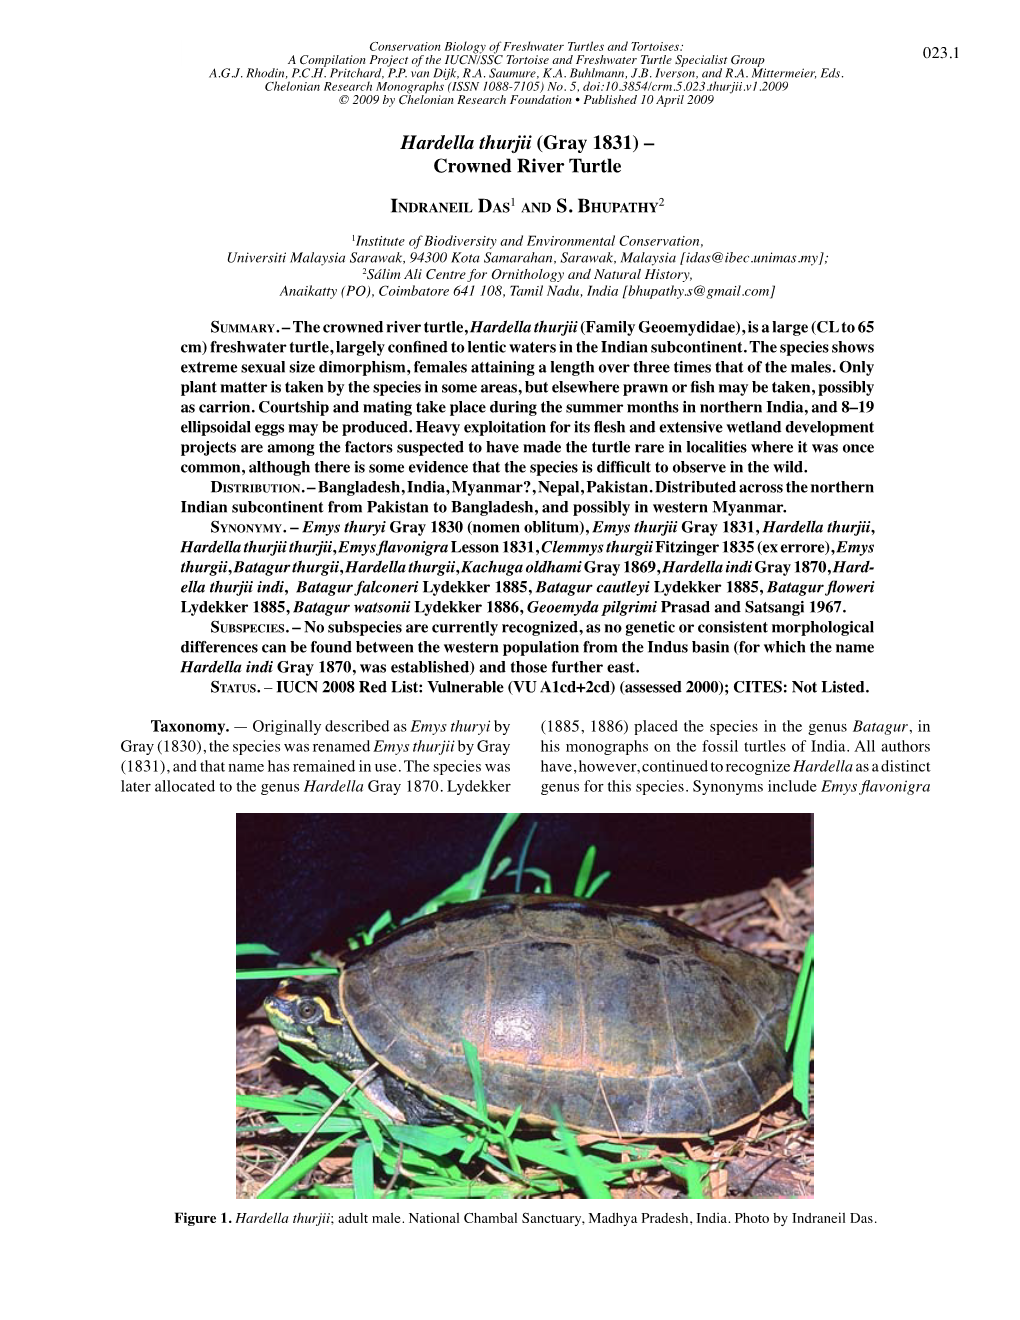 Hardella Thurjii (Gray 1831) – Crowned River Turtle